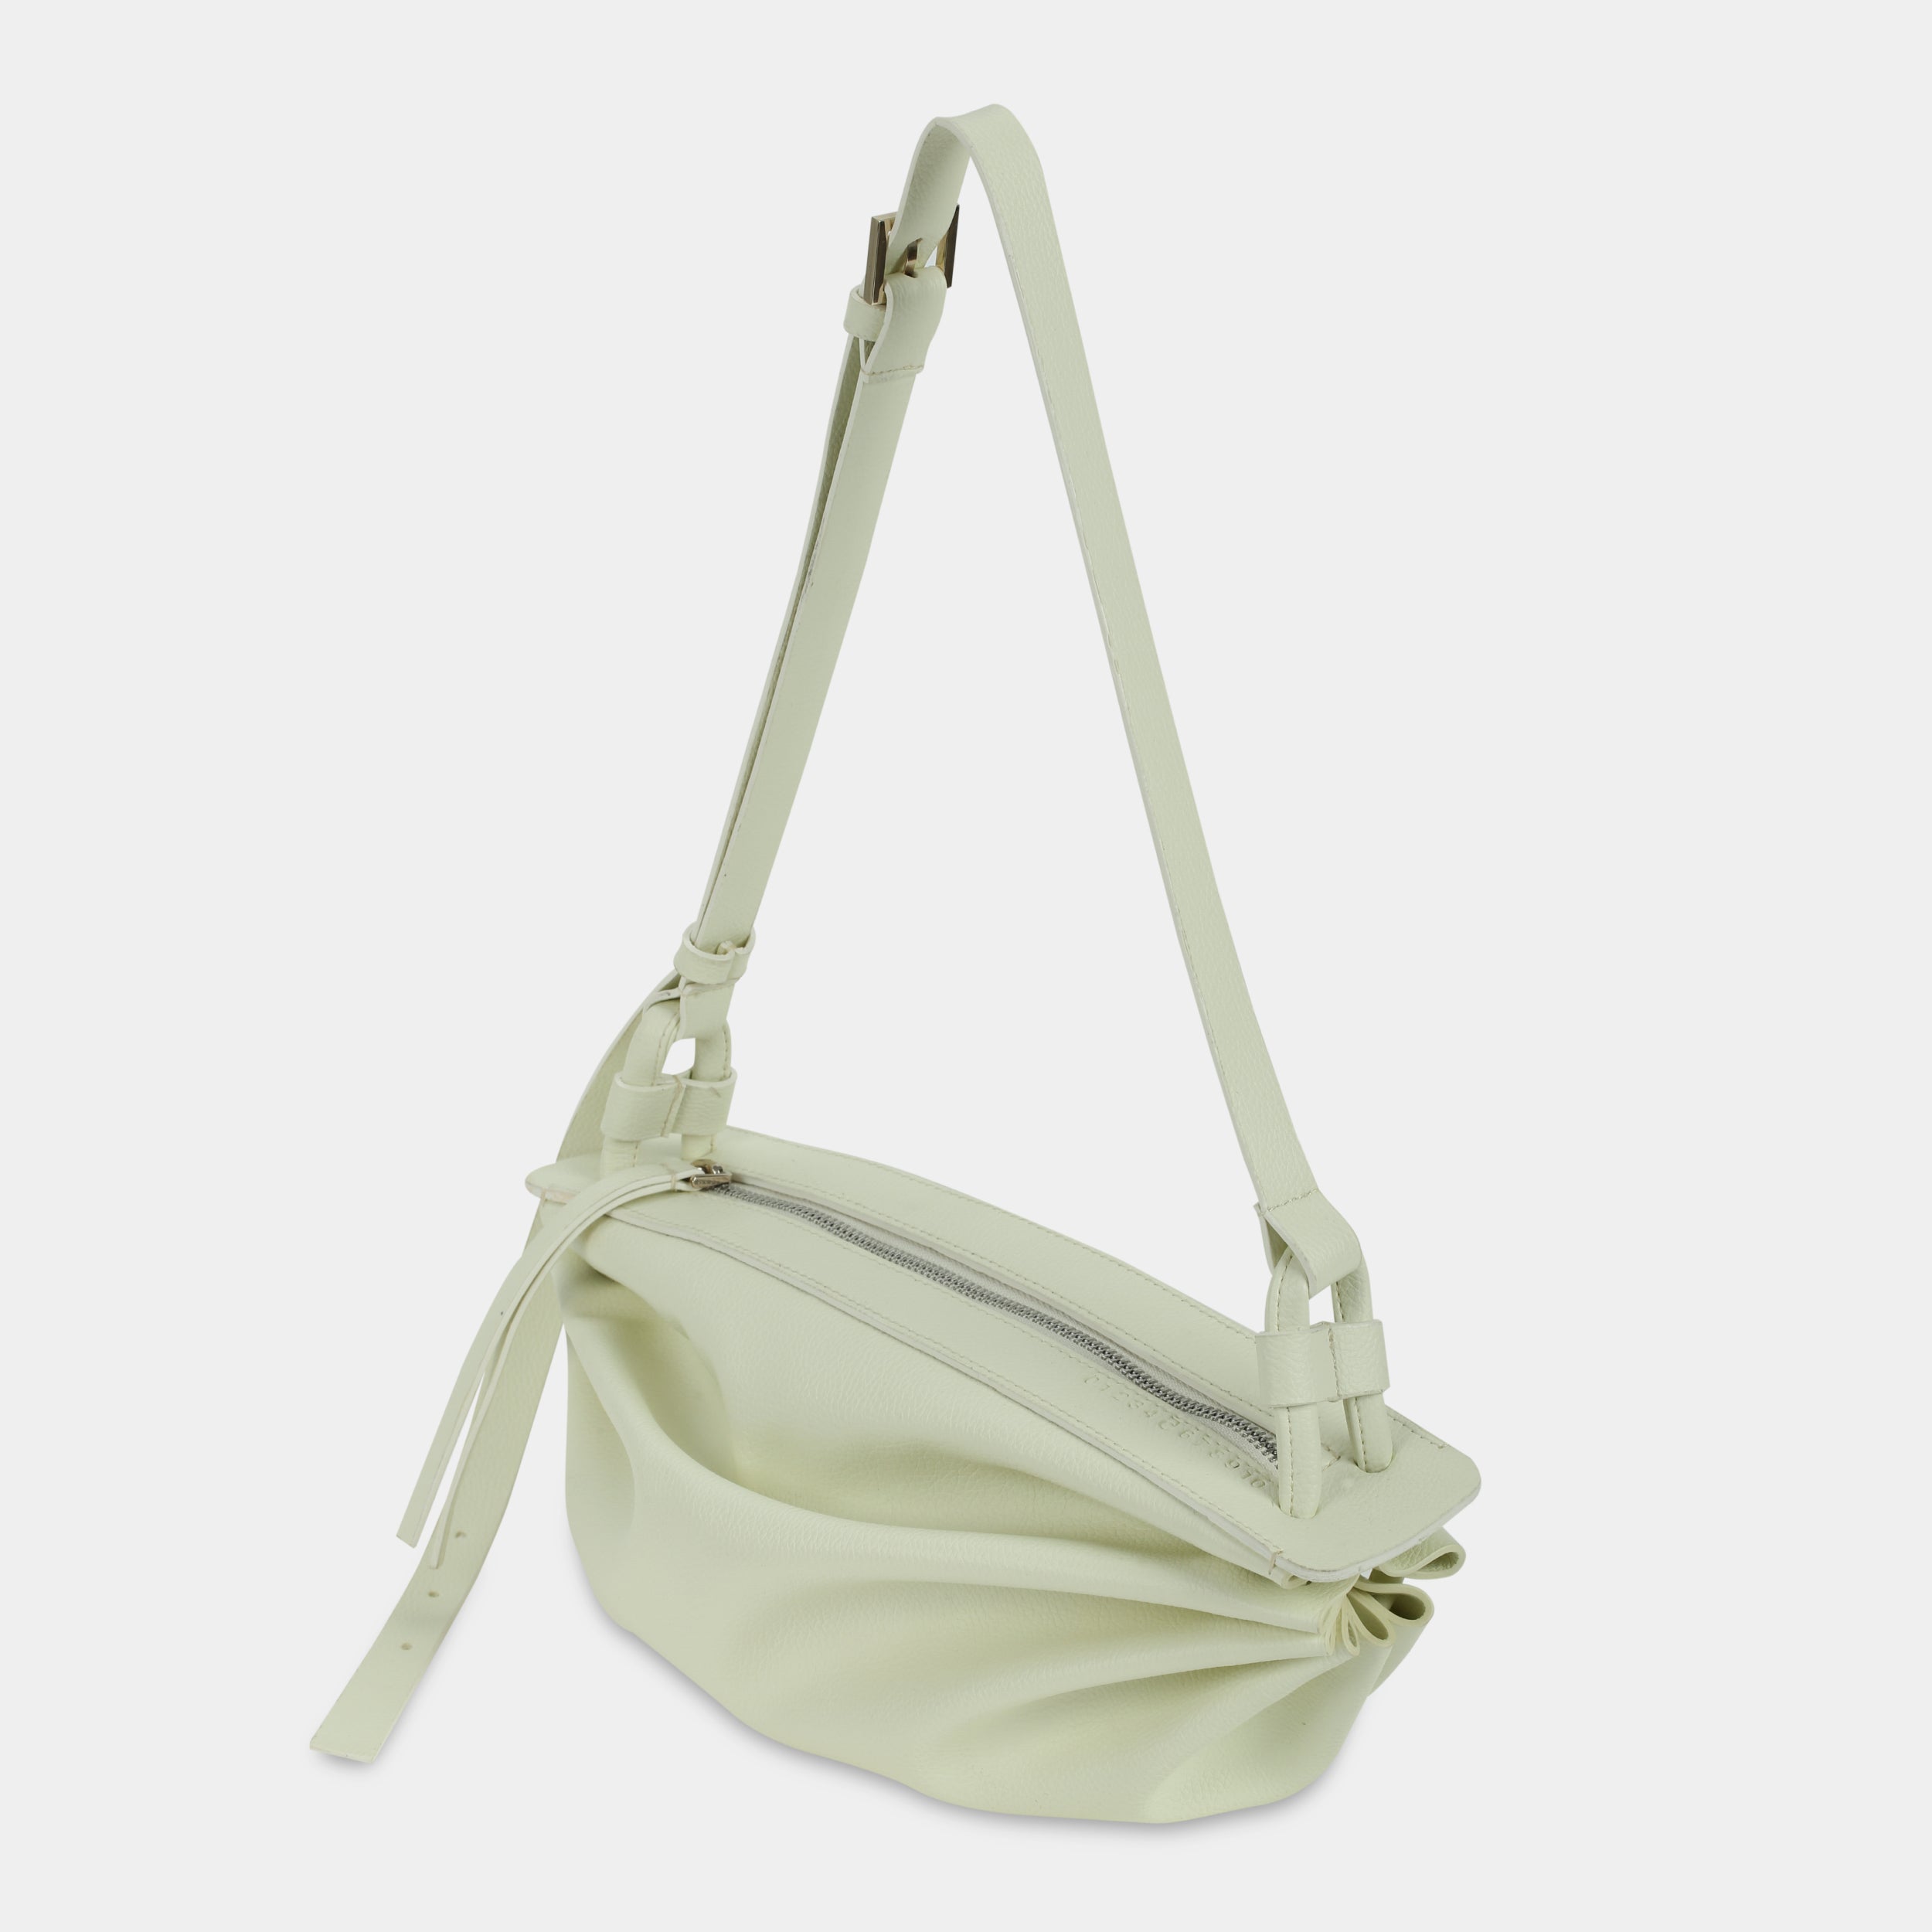 BOAT bag large size (M) white color